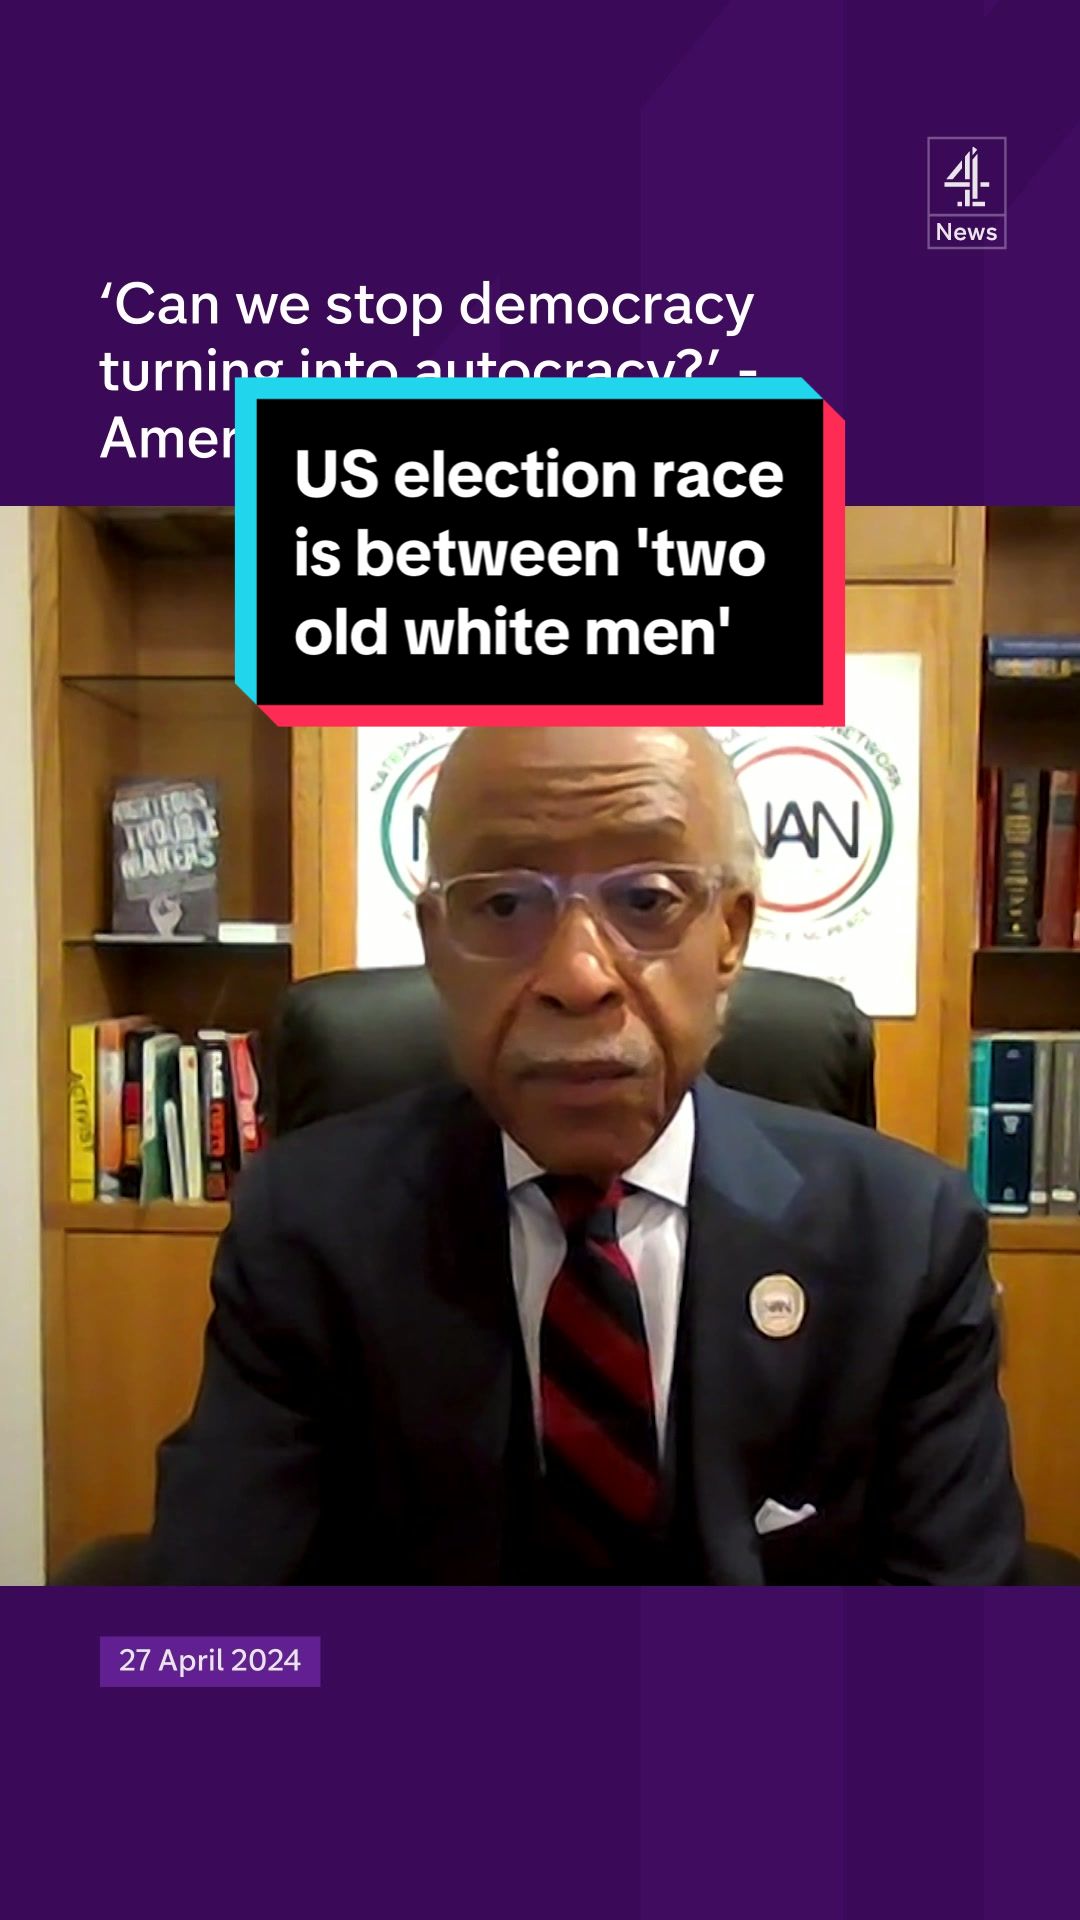 'If Americans vote for what they stand for, Joe Biden will nail it', American civil rights activist Al Sharpton tells us #c4news #US #politics #alsharpton #trump #biden